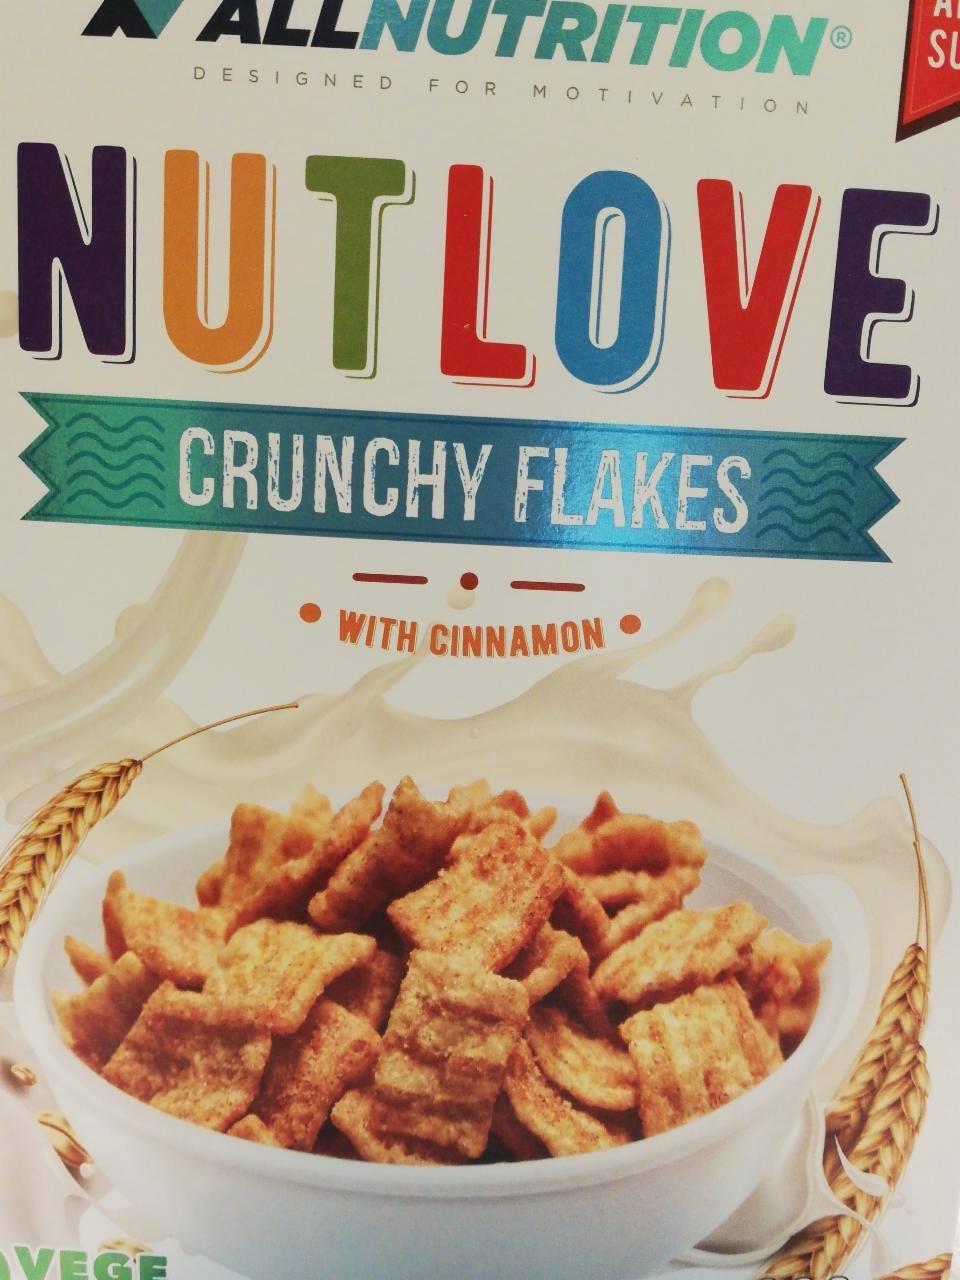 Képek - Nutlove Crunchy flakes Allnutrition